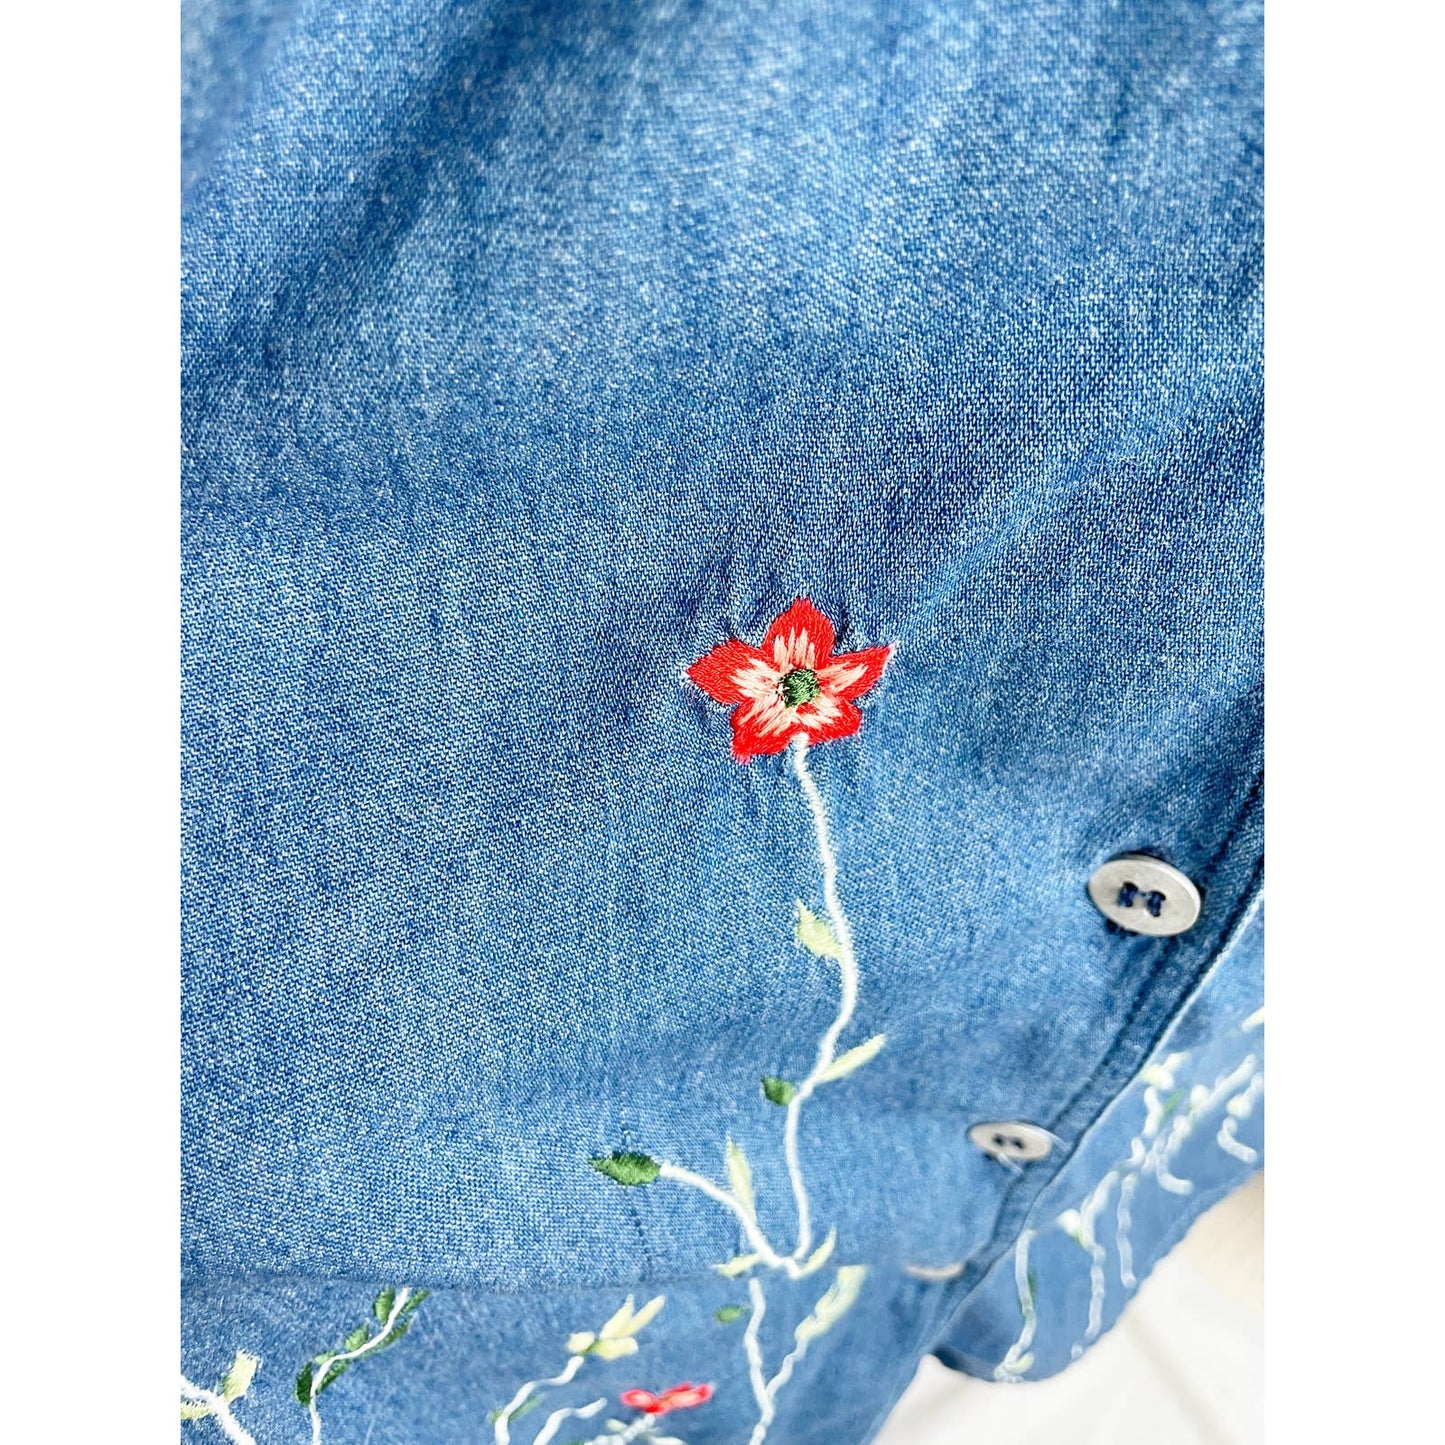 Vintage 1990s Denim Shirt Dress Embroidered Floral Button Front Womens XL A1003